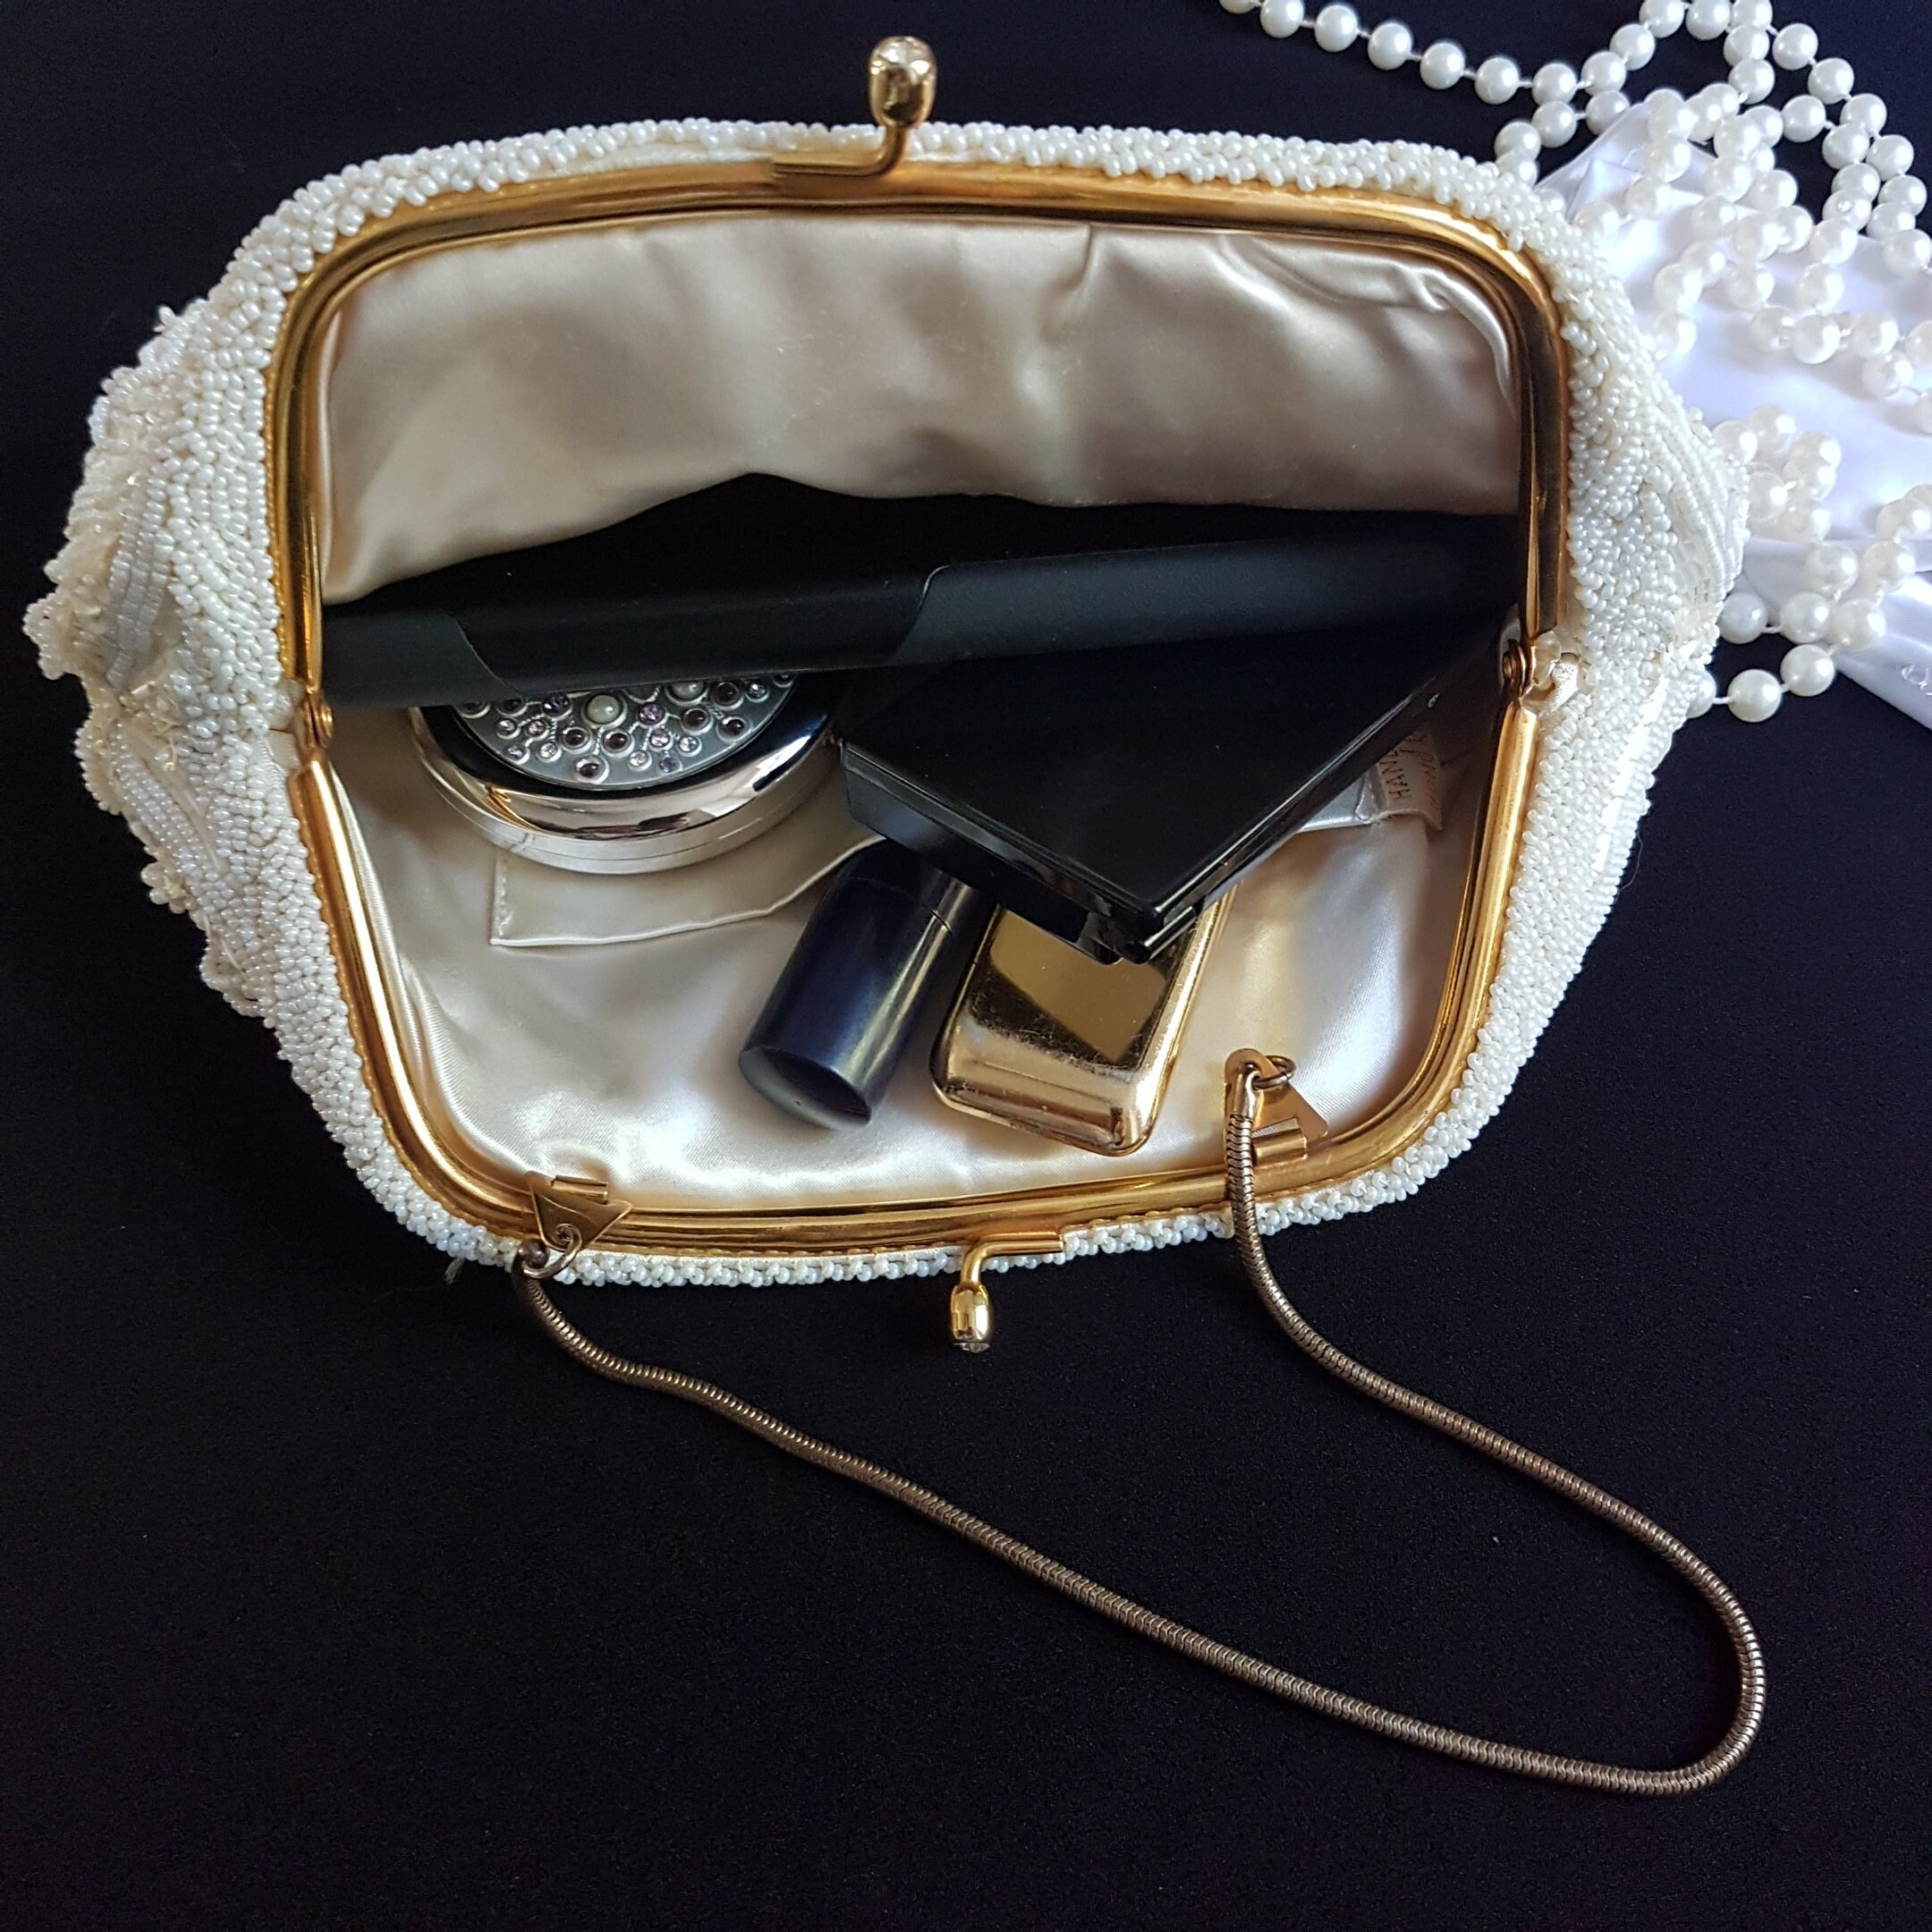 Women's Beaded Kiss Lock Clasp Bag - Decorative Coin Purse - White